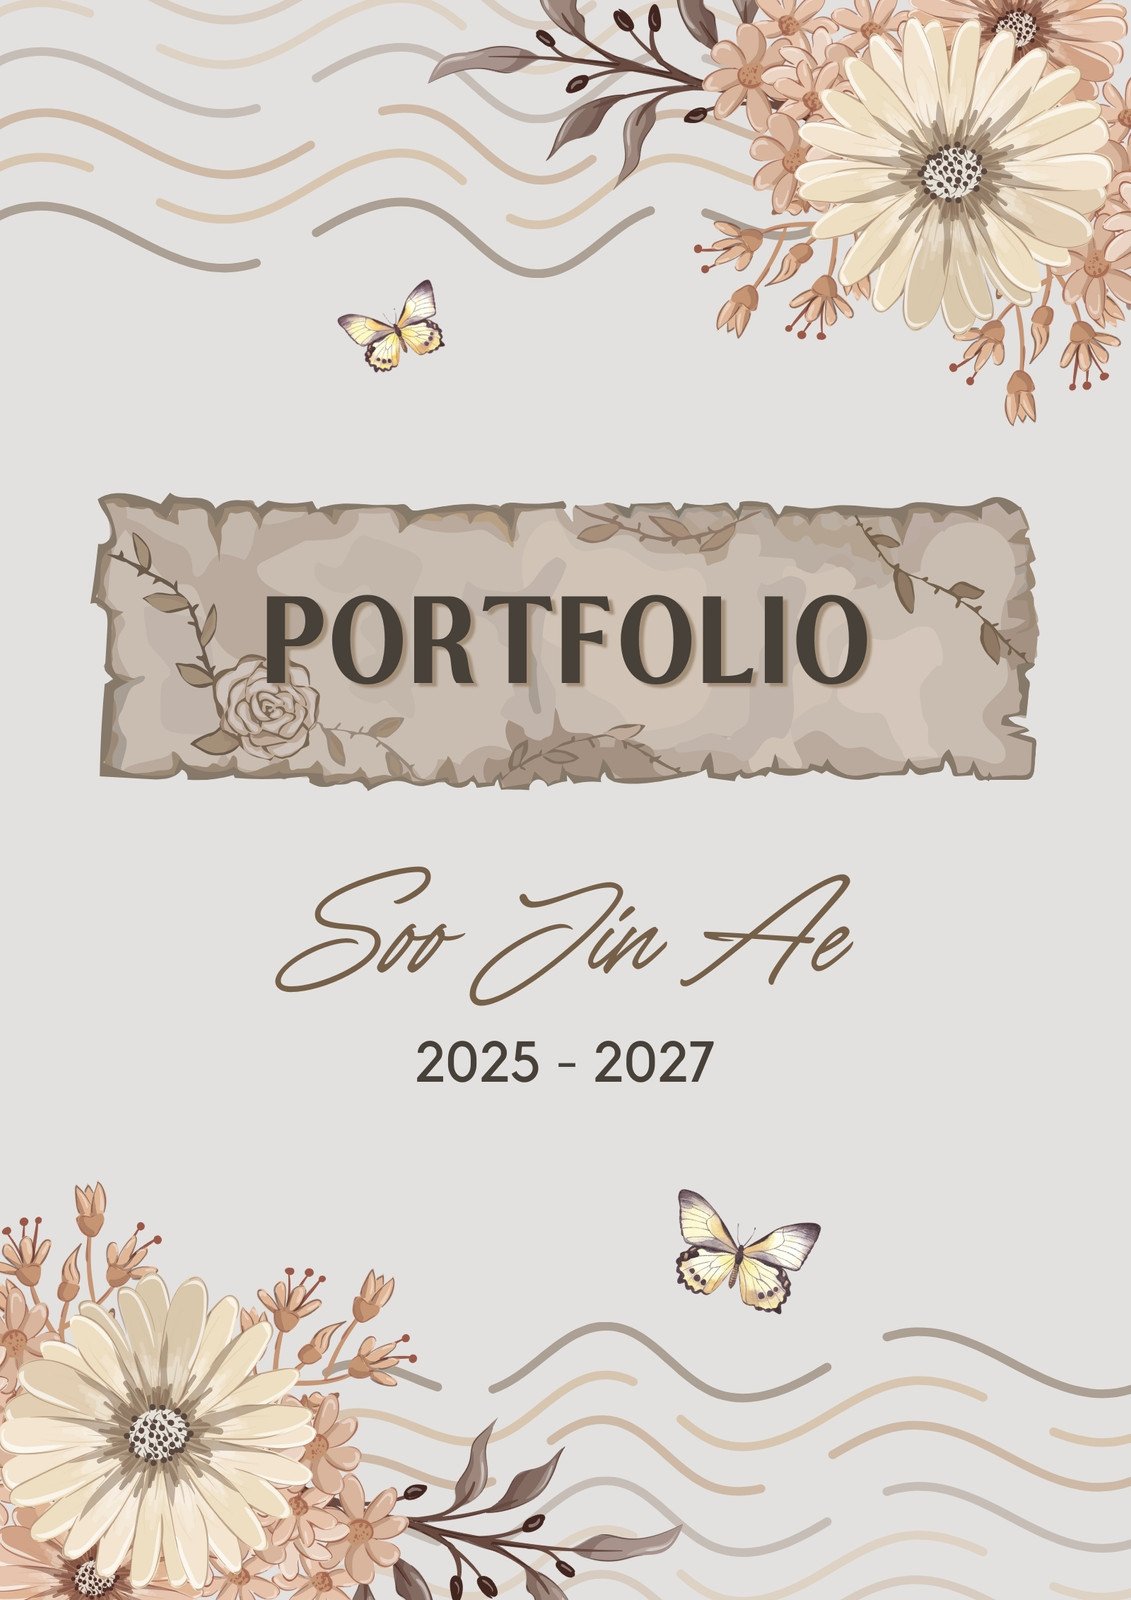 Free to edit and print student portfolio templates